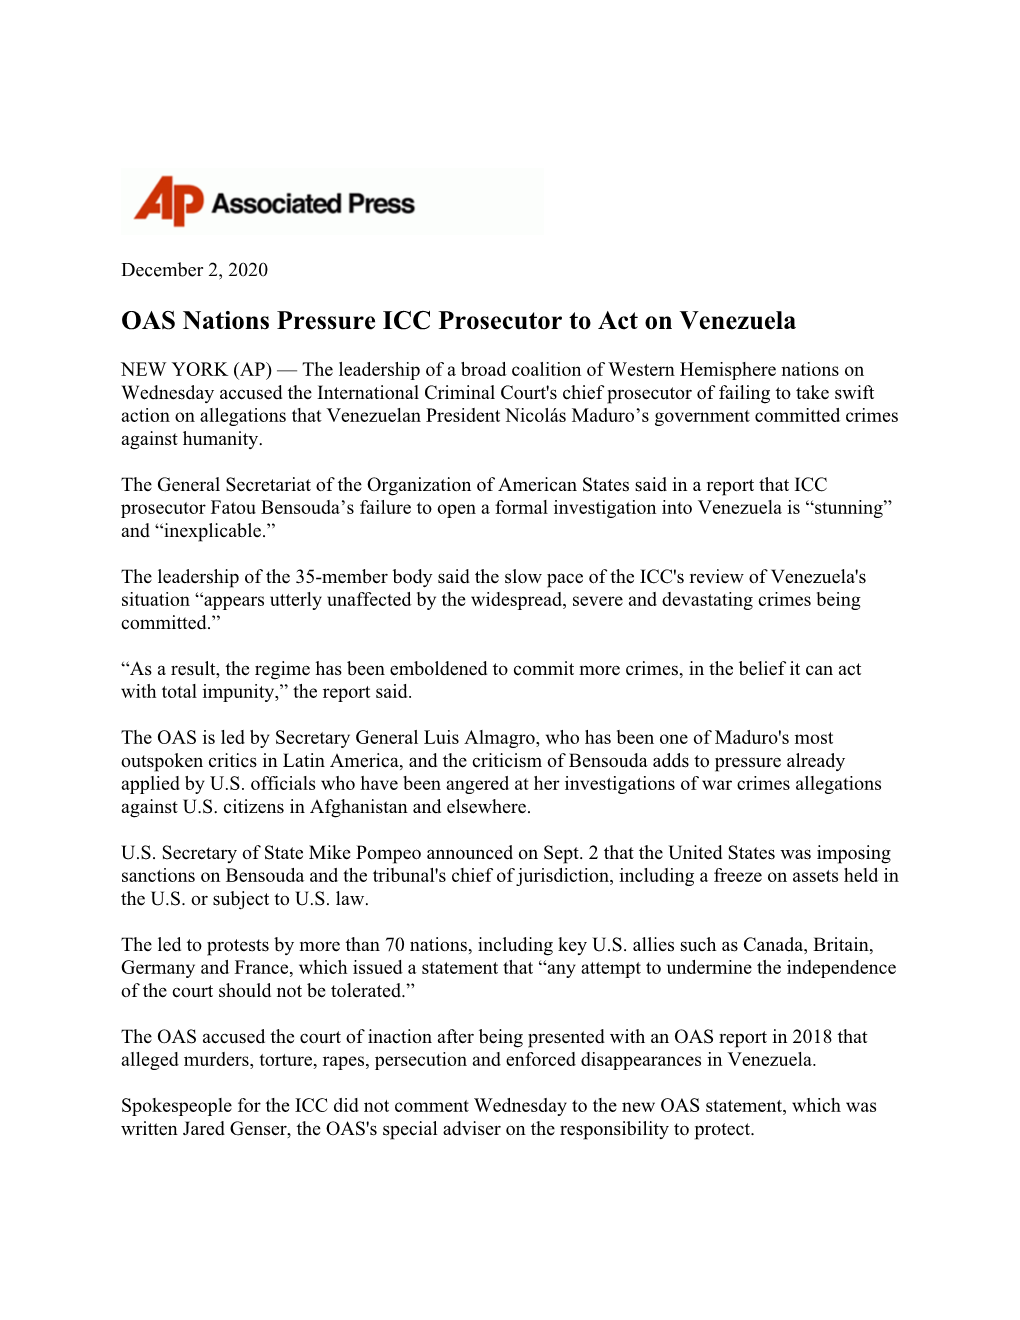 OAS Nations Pressure ICC Prosecutor to Act on Venezuela